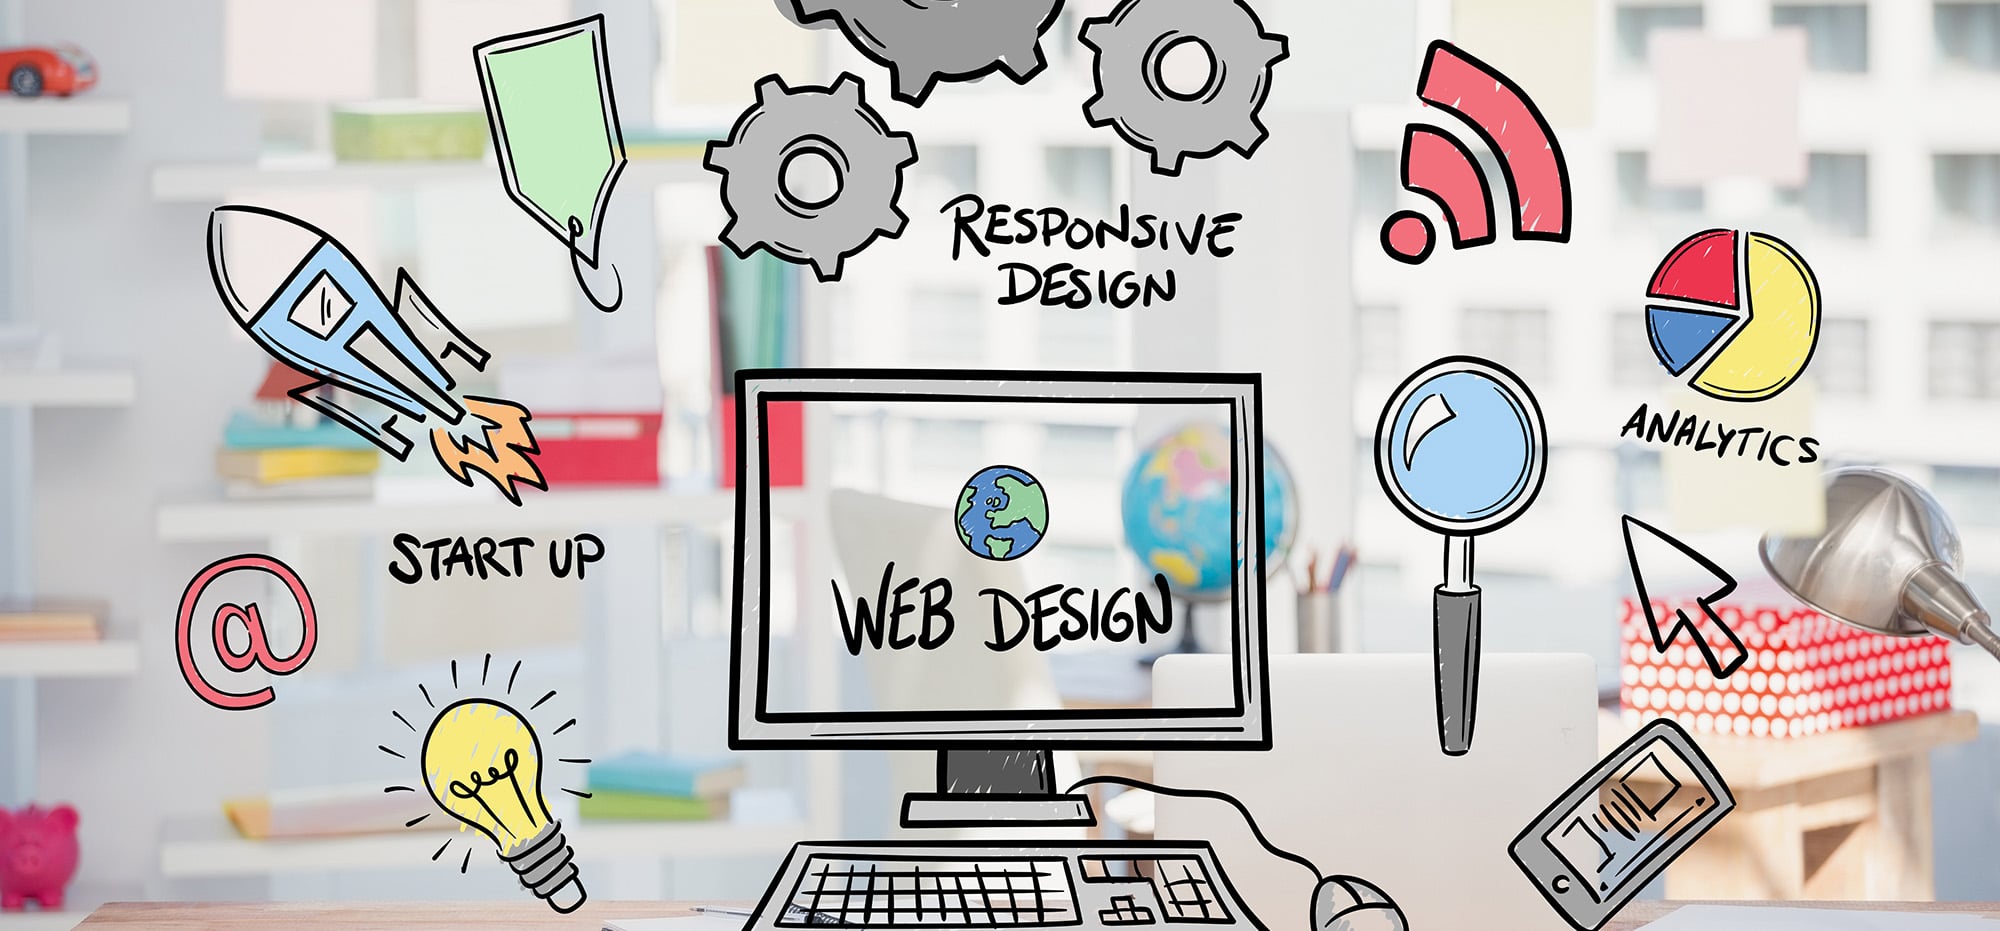 Webagentur & Online Marketing web design concept with